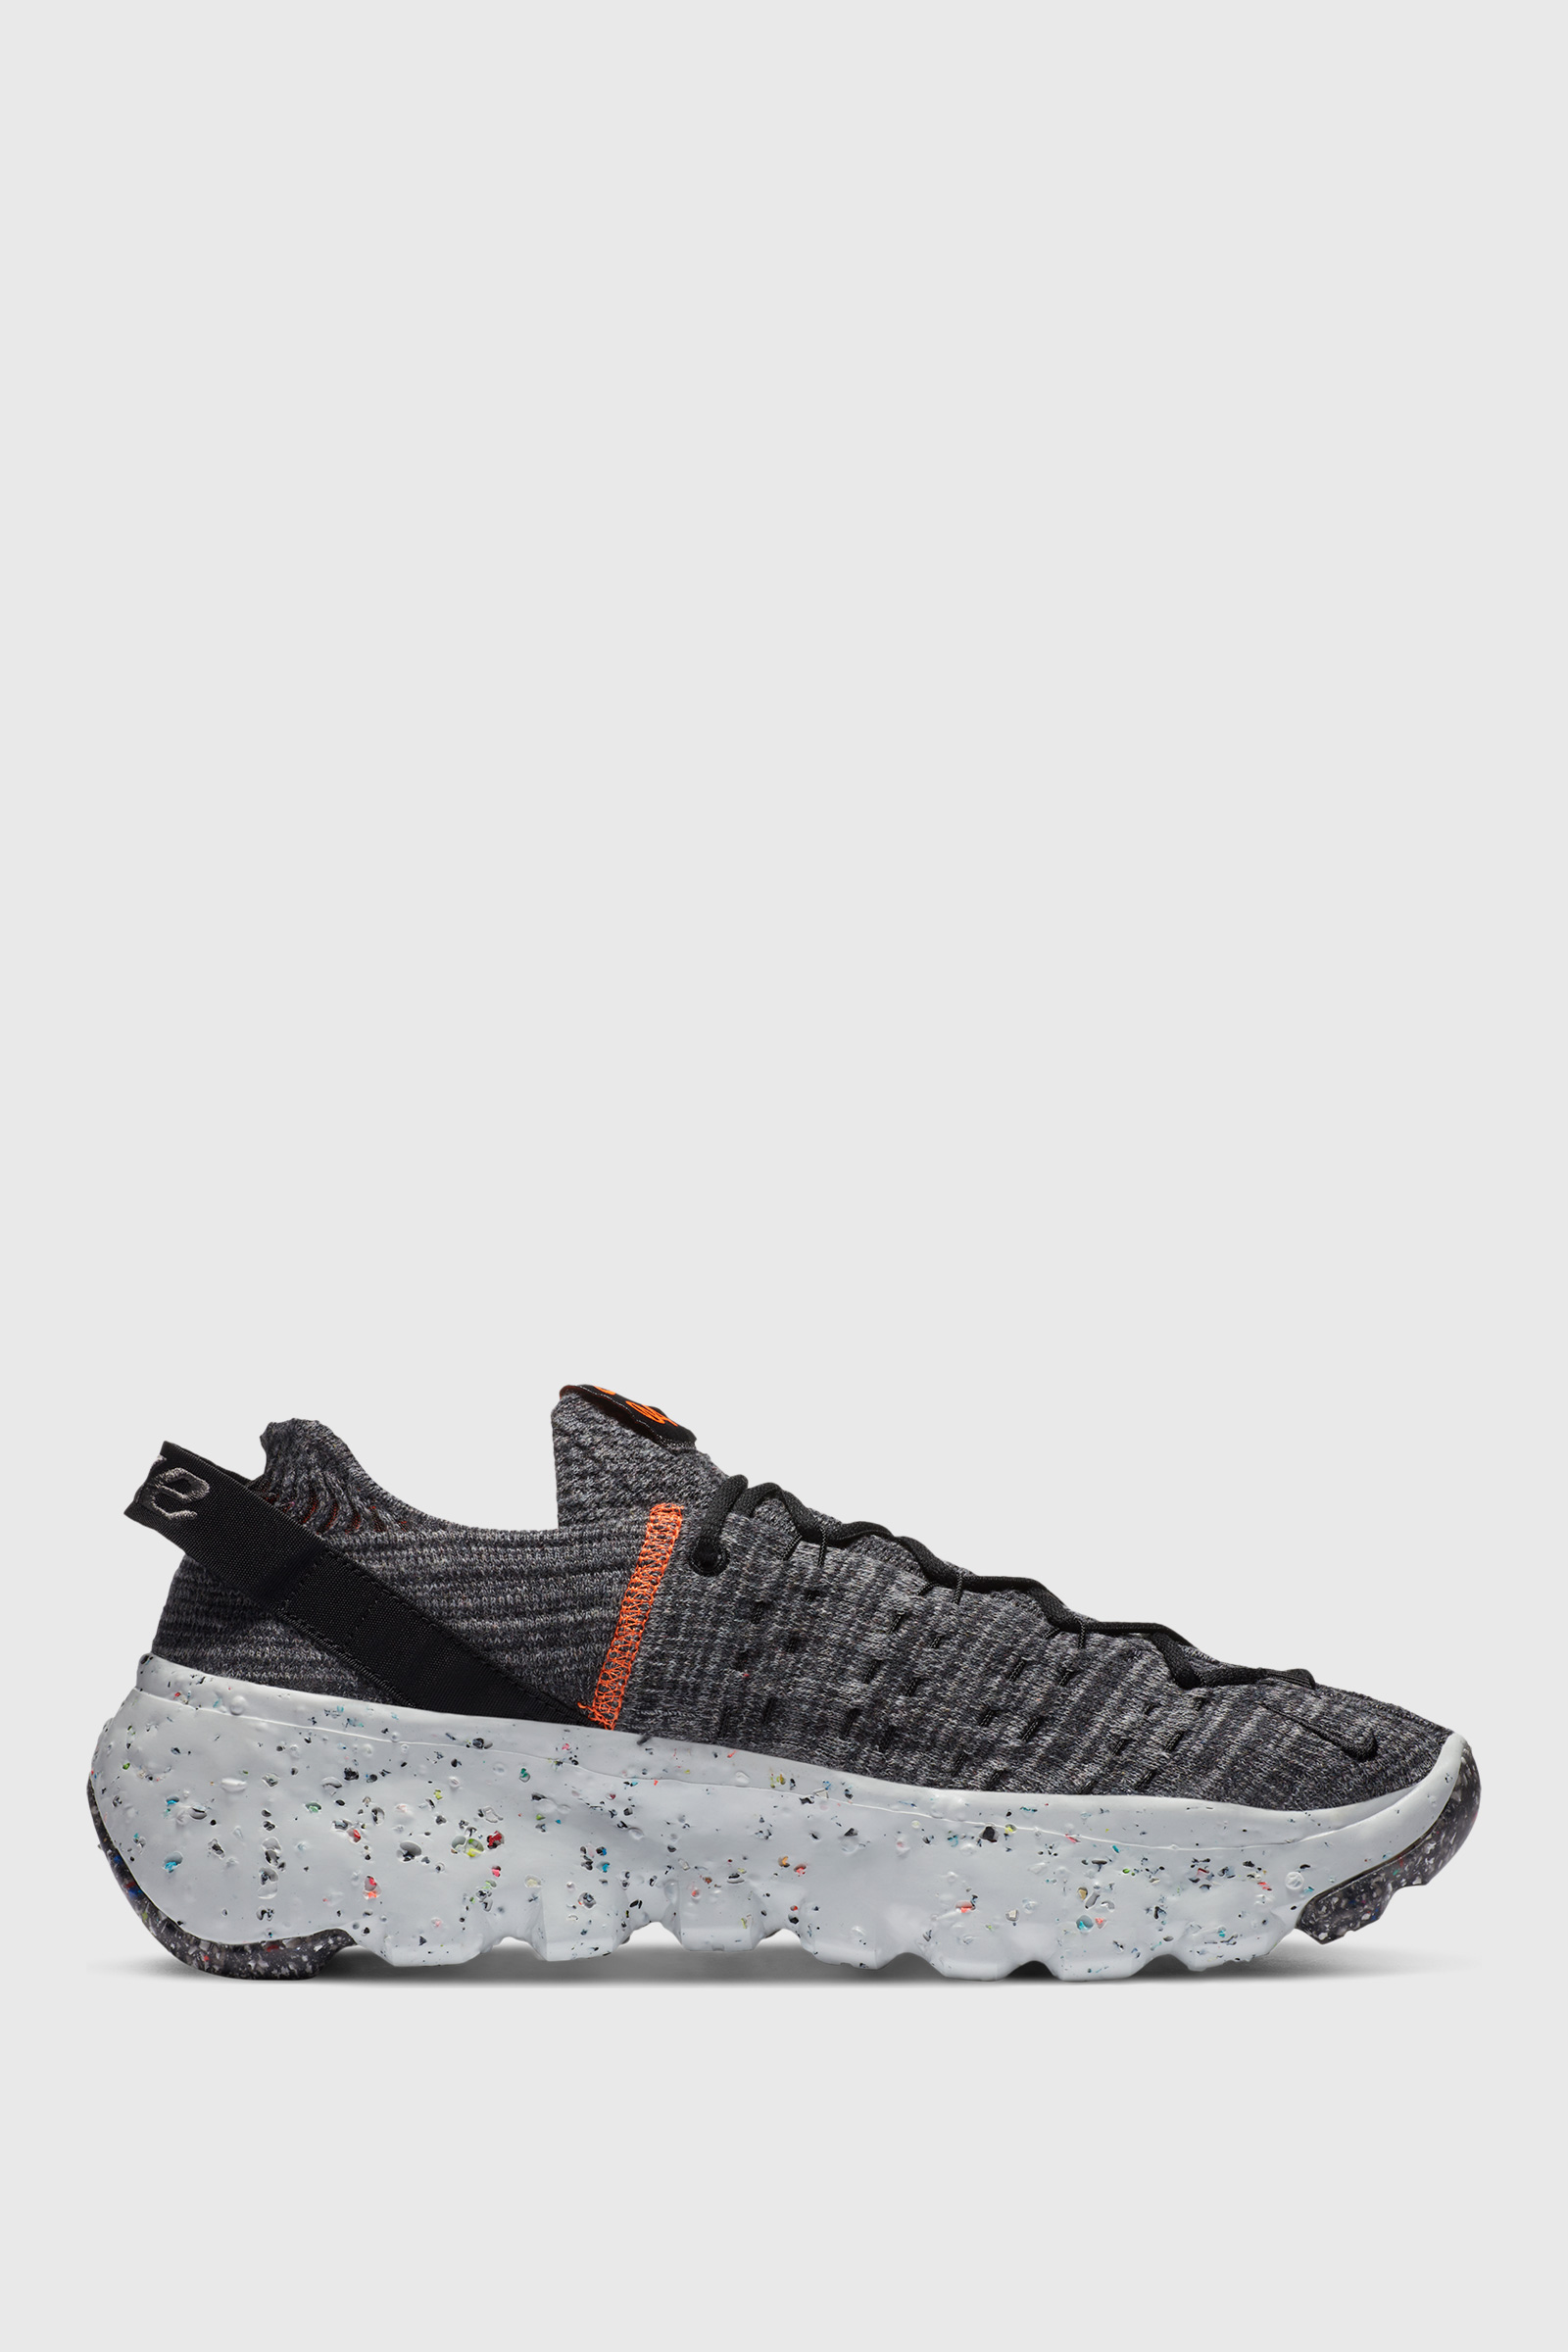 Nike Nike Space Hippie 04 Iron grey/dust-black (002) | WoodWood.com